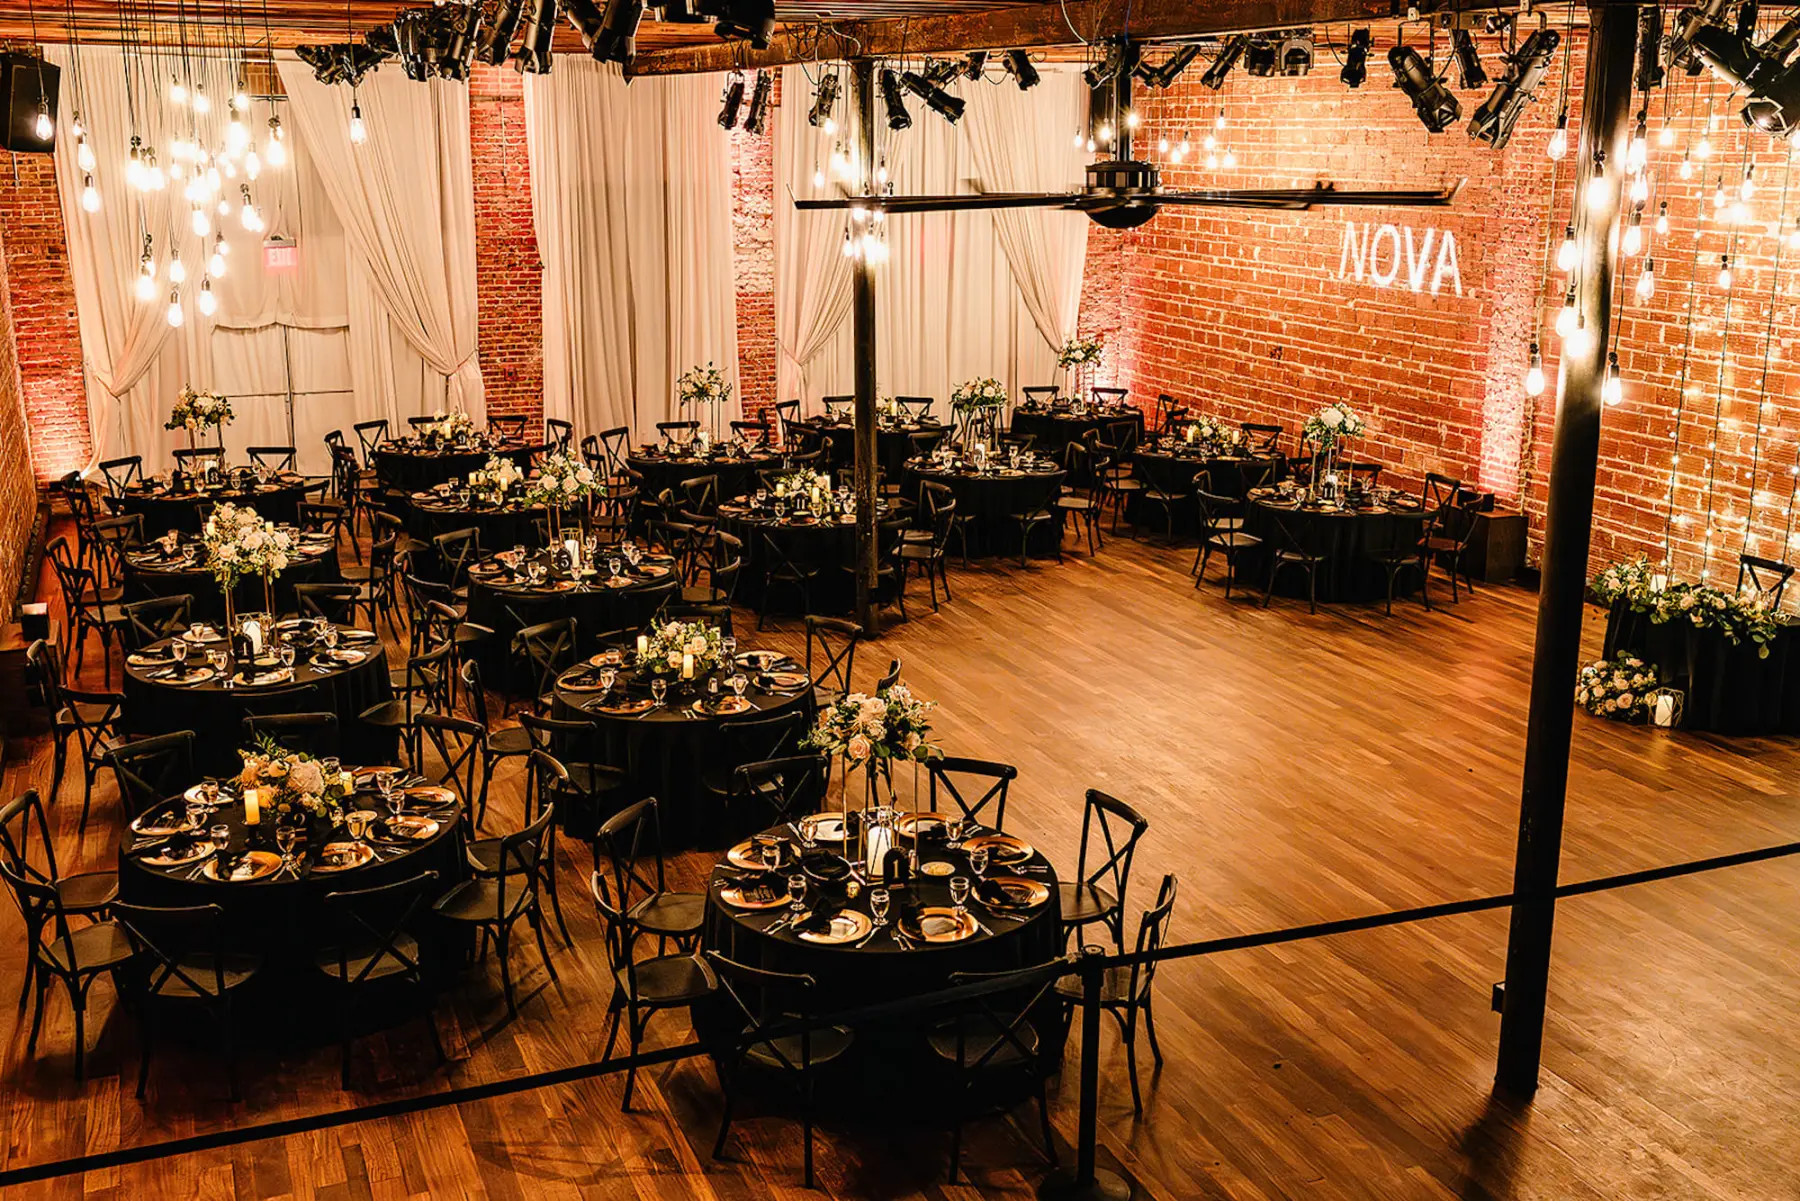 Modern Industrial Black and Gold Gatsby Inspired Wedding Reception Ideas | Tampa Bay Event Venue Nova 535